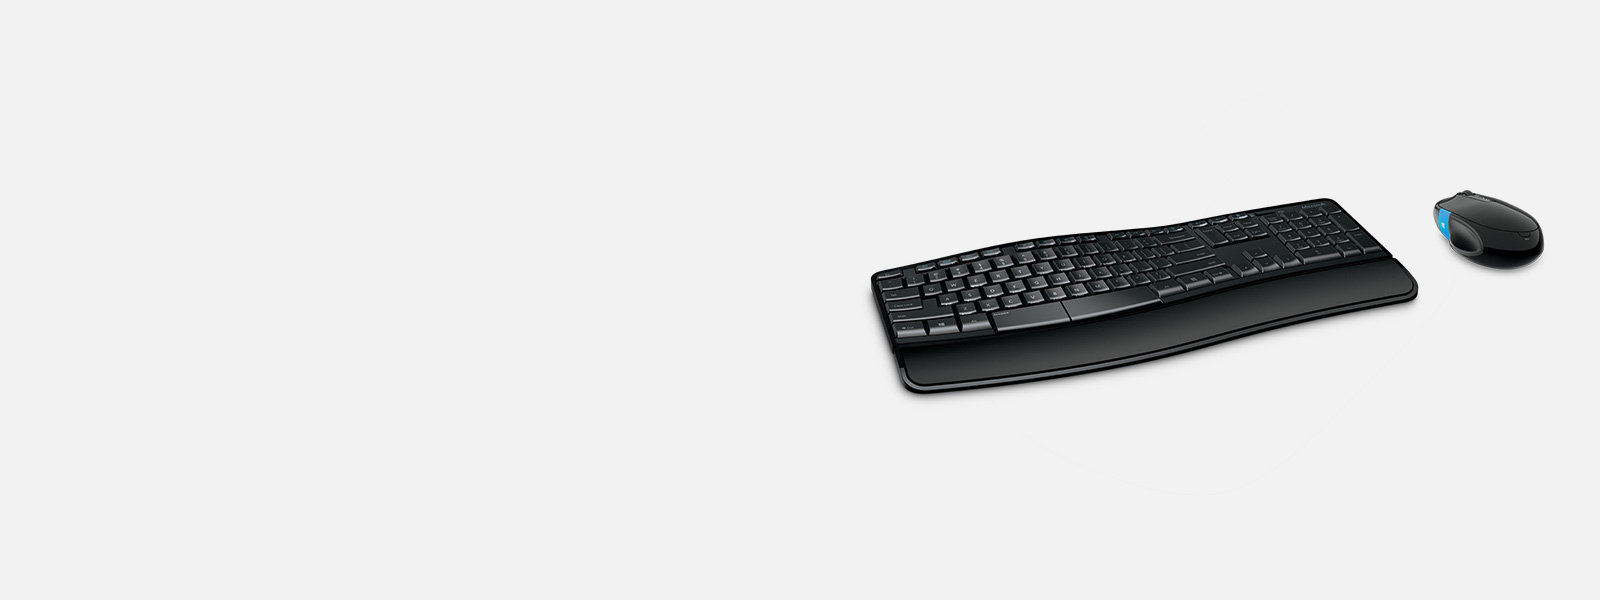 Microsoft Sculpt Comfort Desktop - Keyboard and Mouse Combo: Multi-Media,  Ergonomic, Microsoft Wireless Mouse and Keyboard (English)